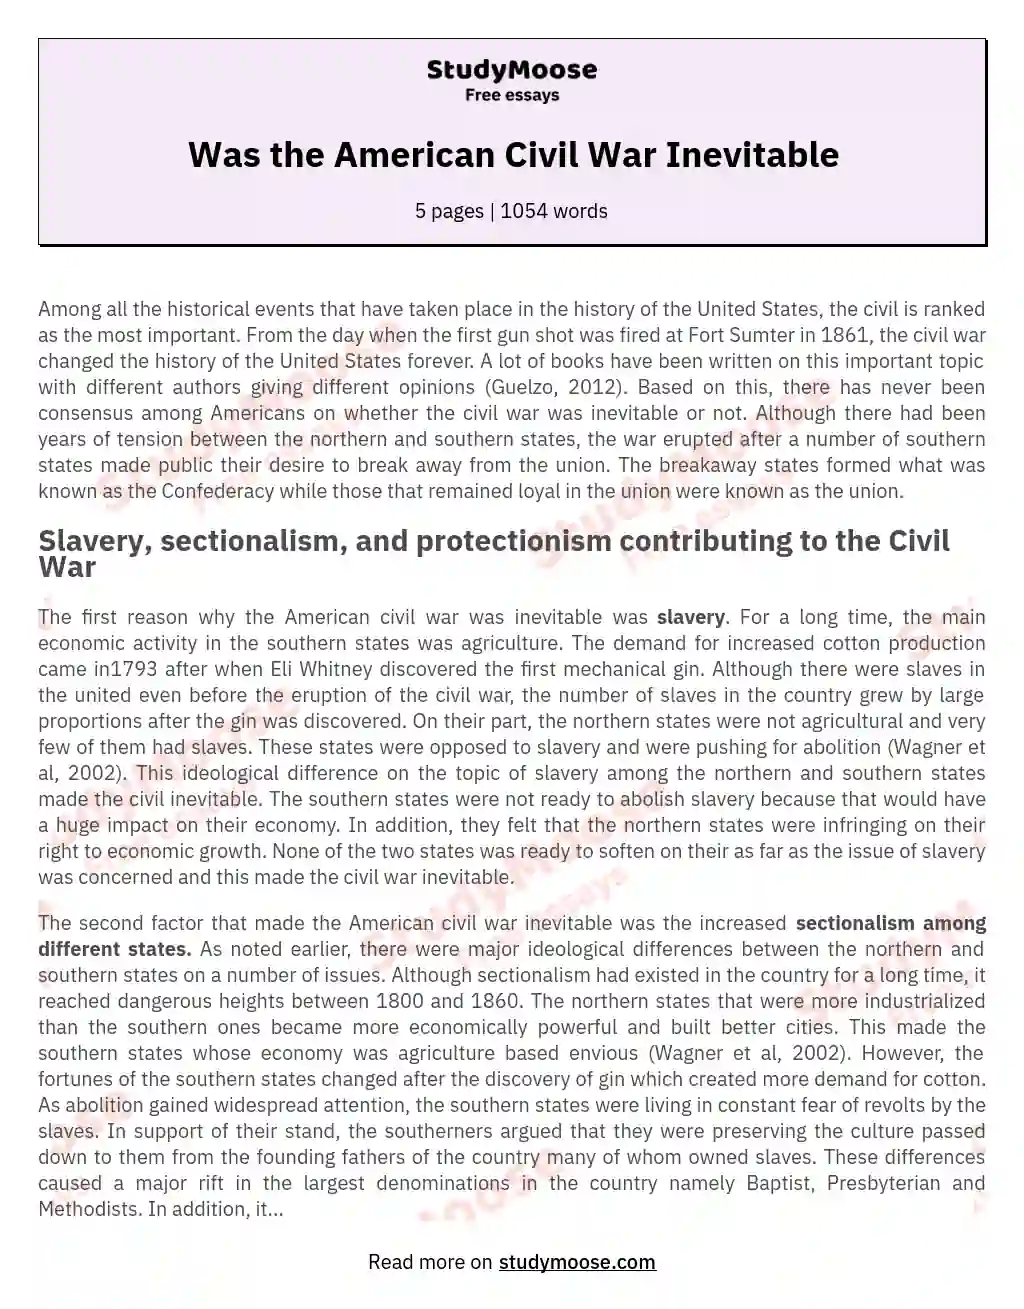 Was the American Civil War Inevitable essay